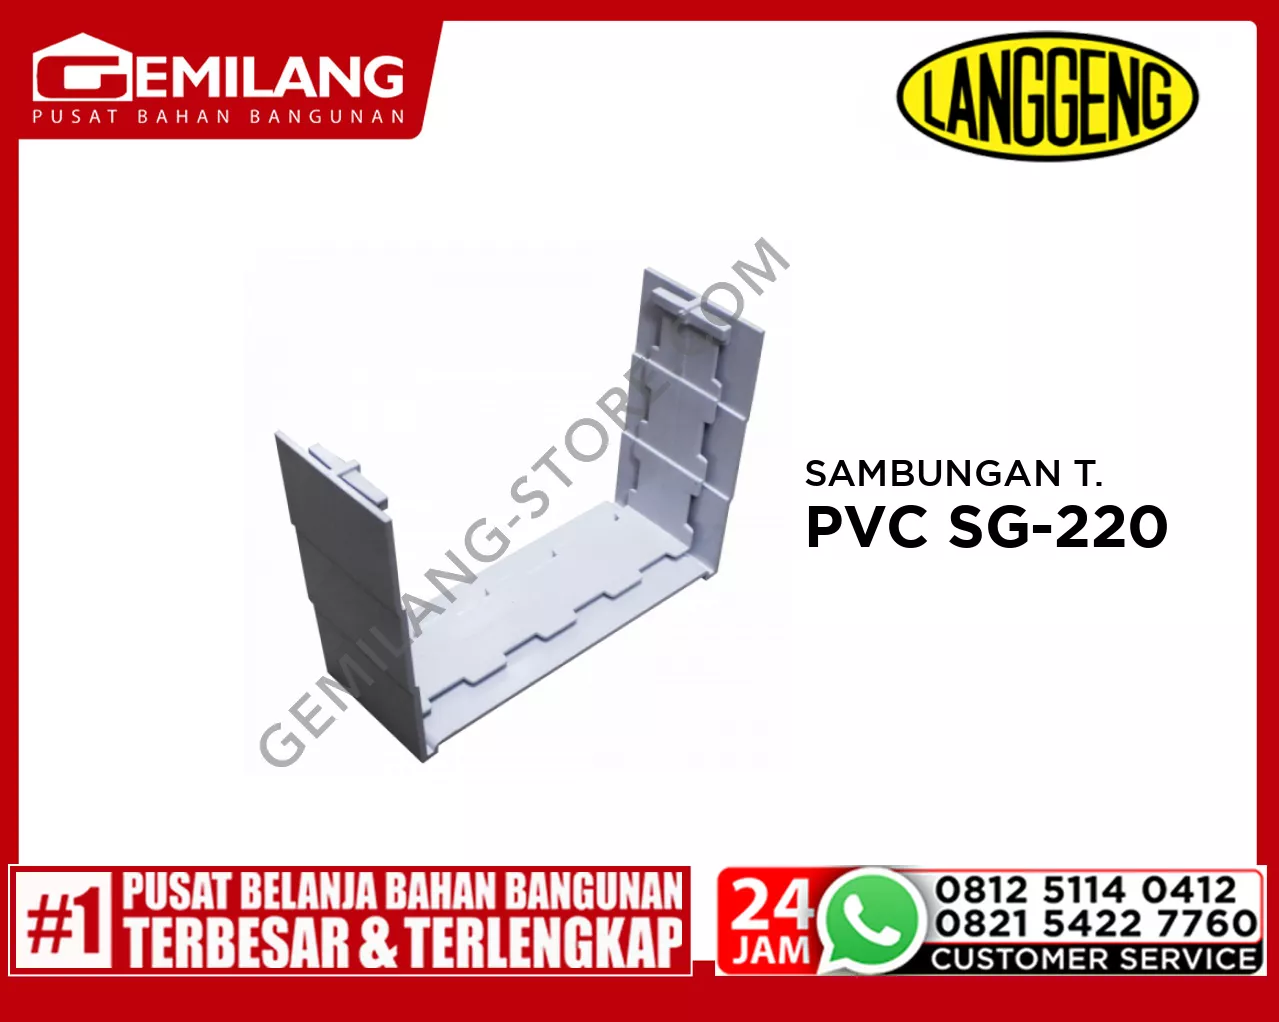 LANGGENG SAMBUNGAN TALANG PVC SG-220